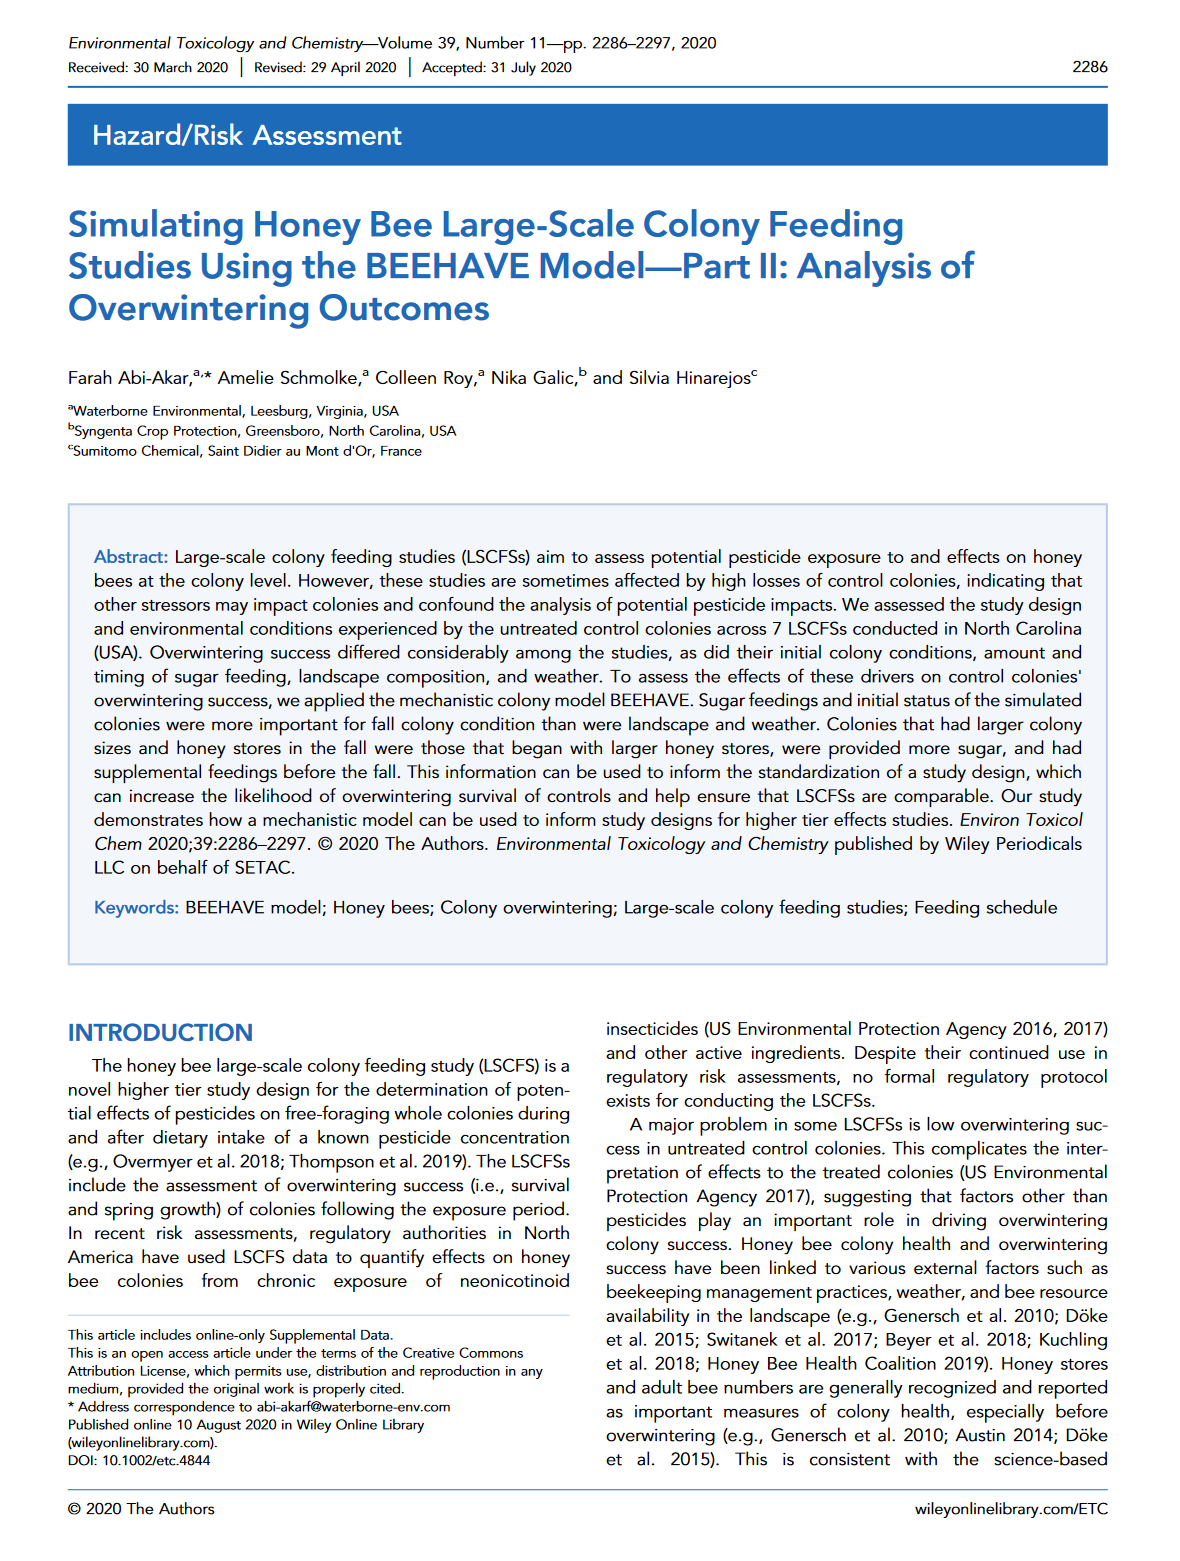 Simulating-honey-bee-large-scale-feeding-studies-part2